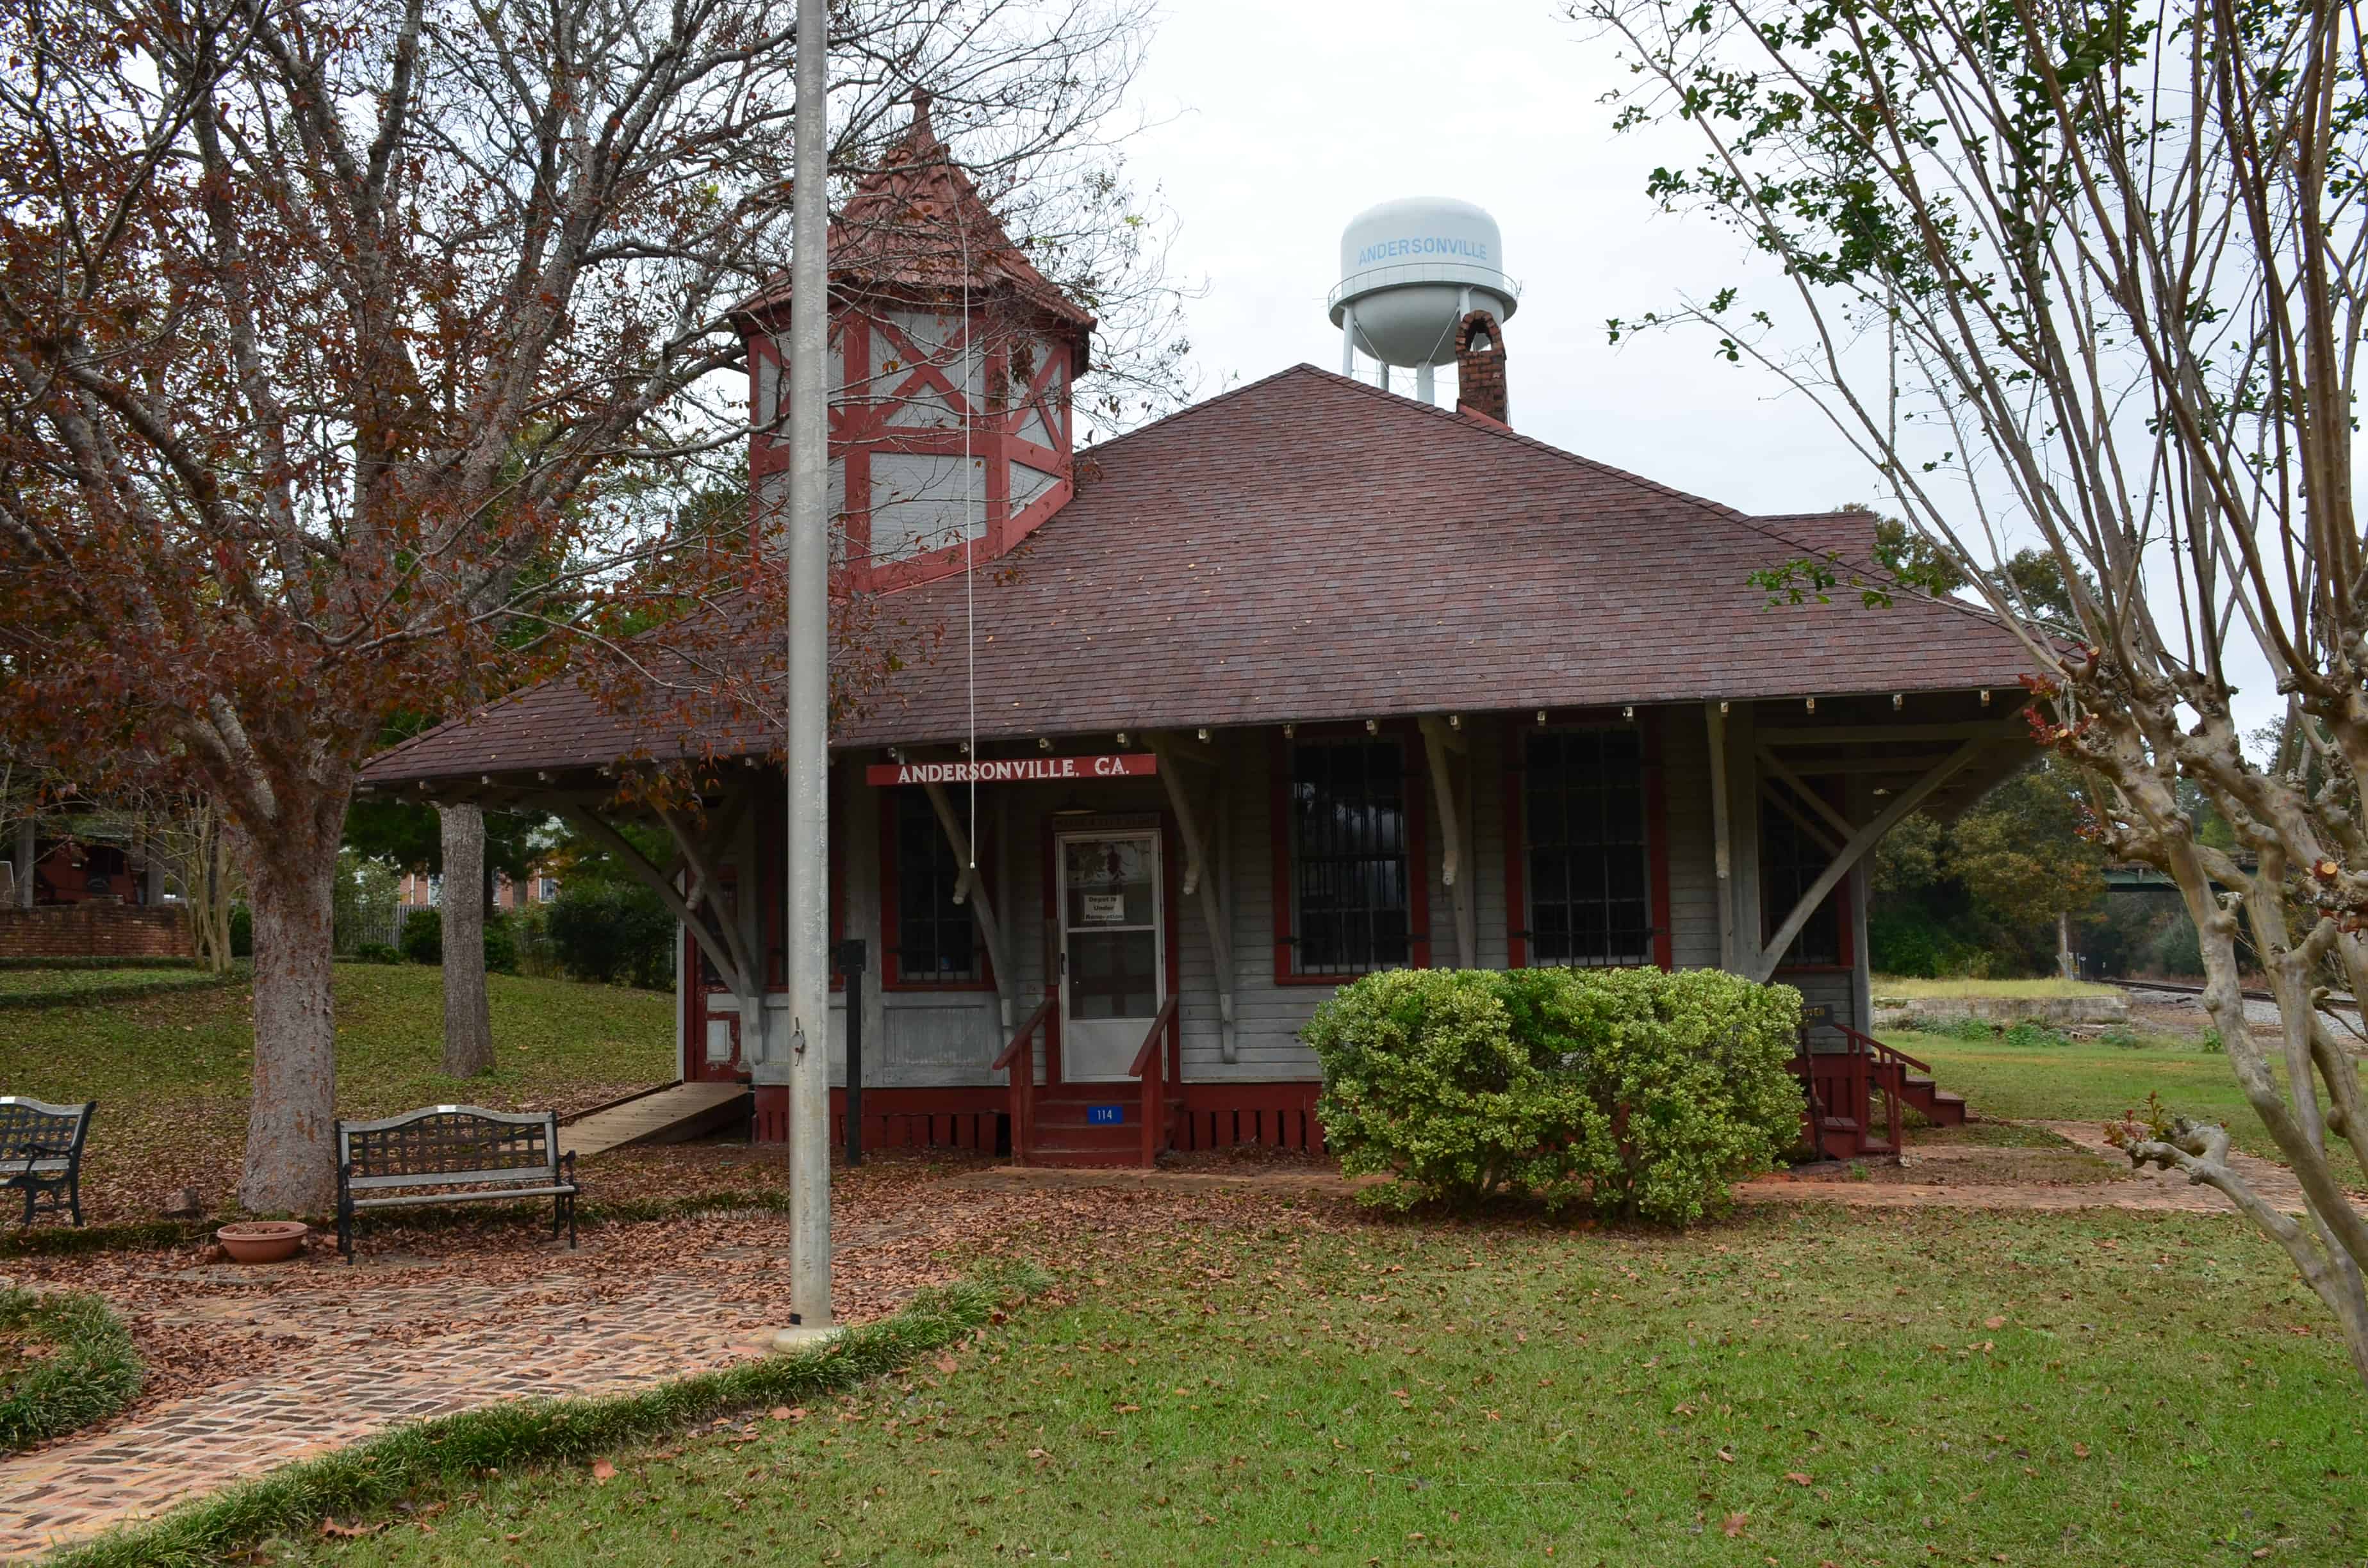 Andersonville Depot in Andersonville, Georgia